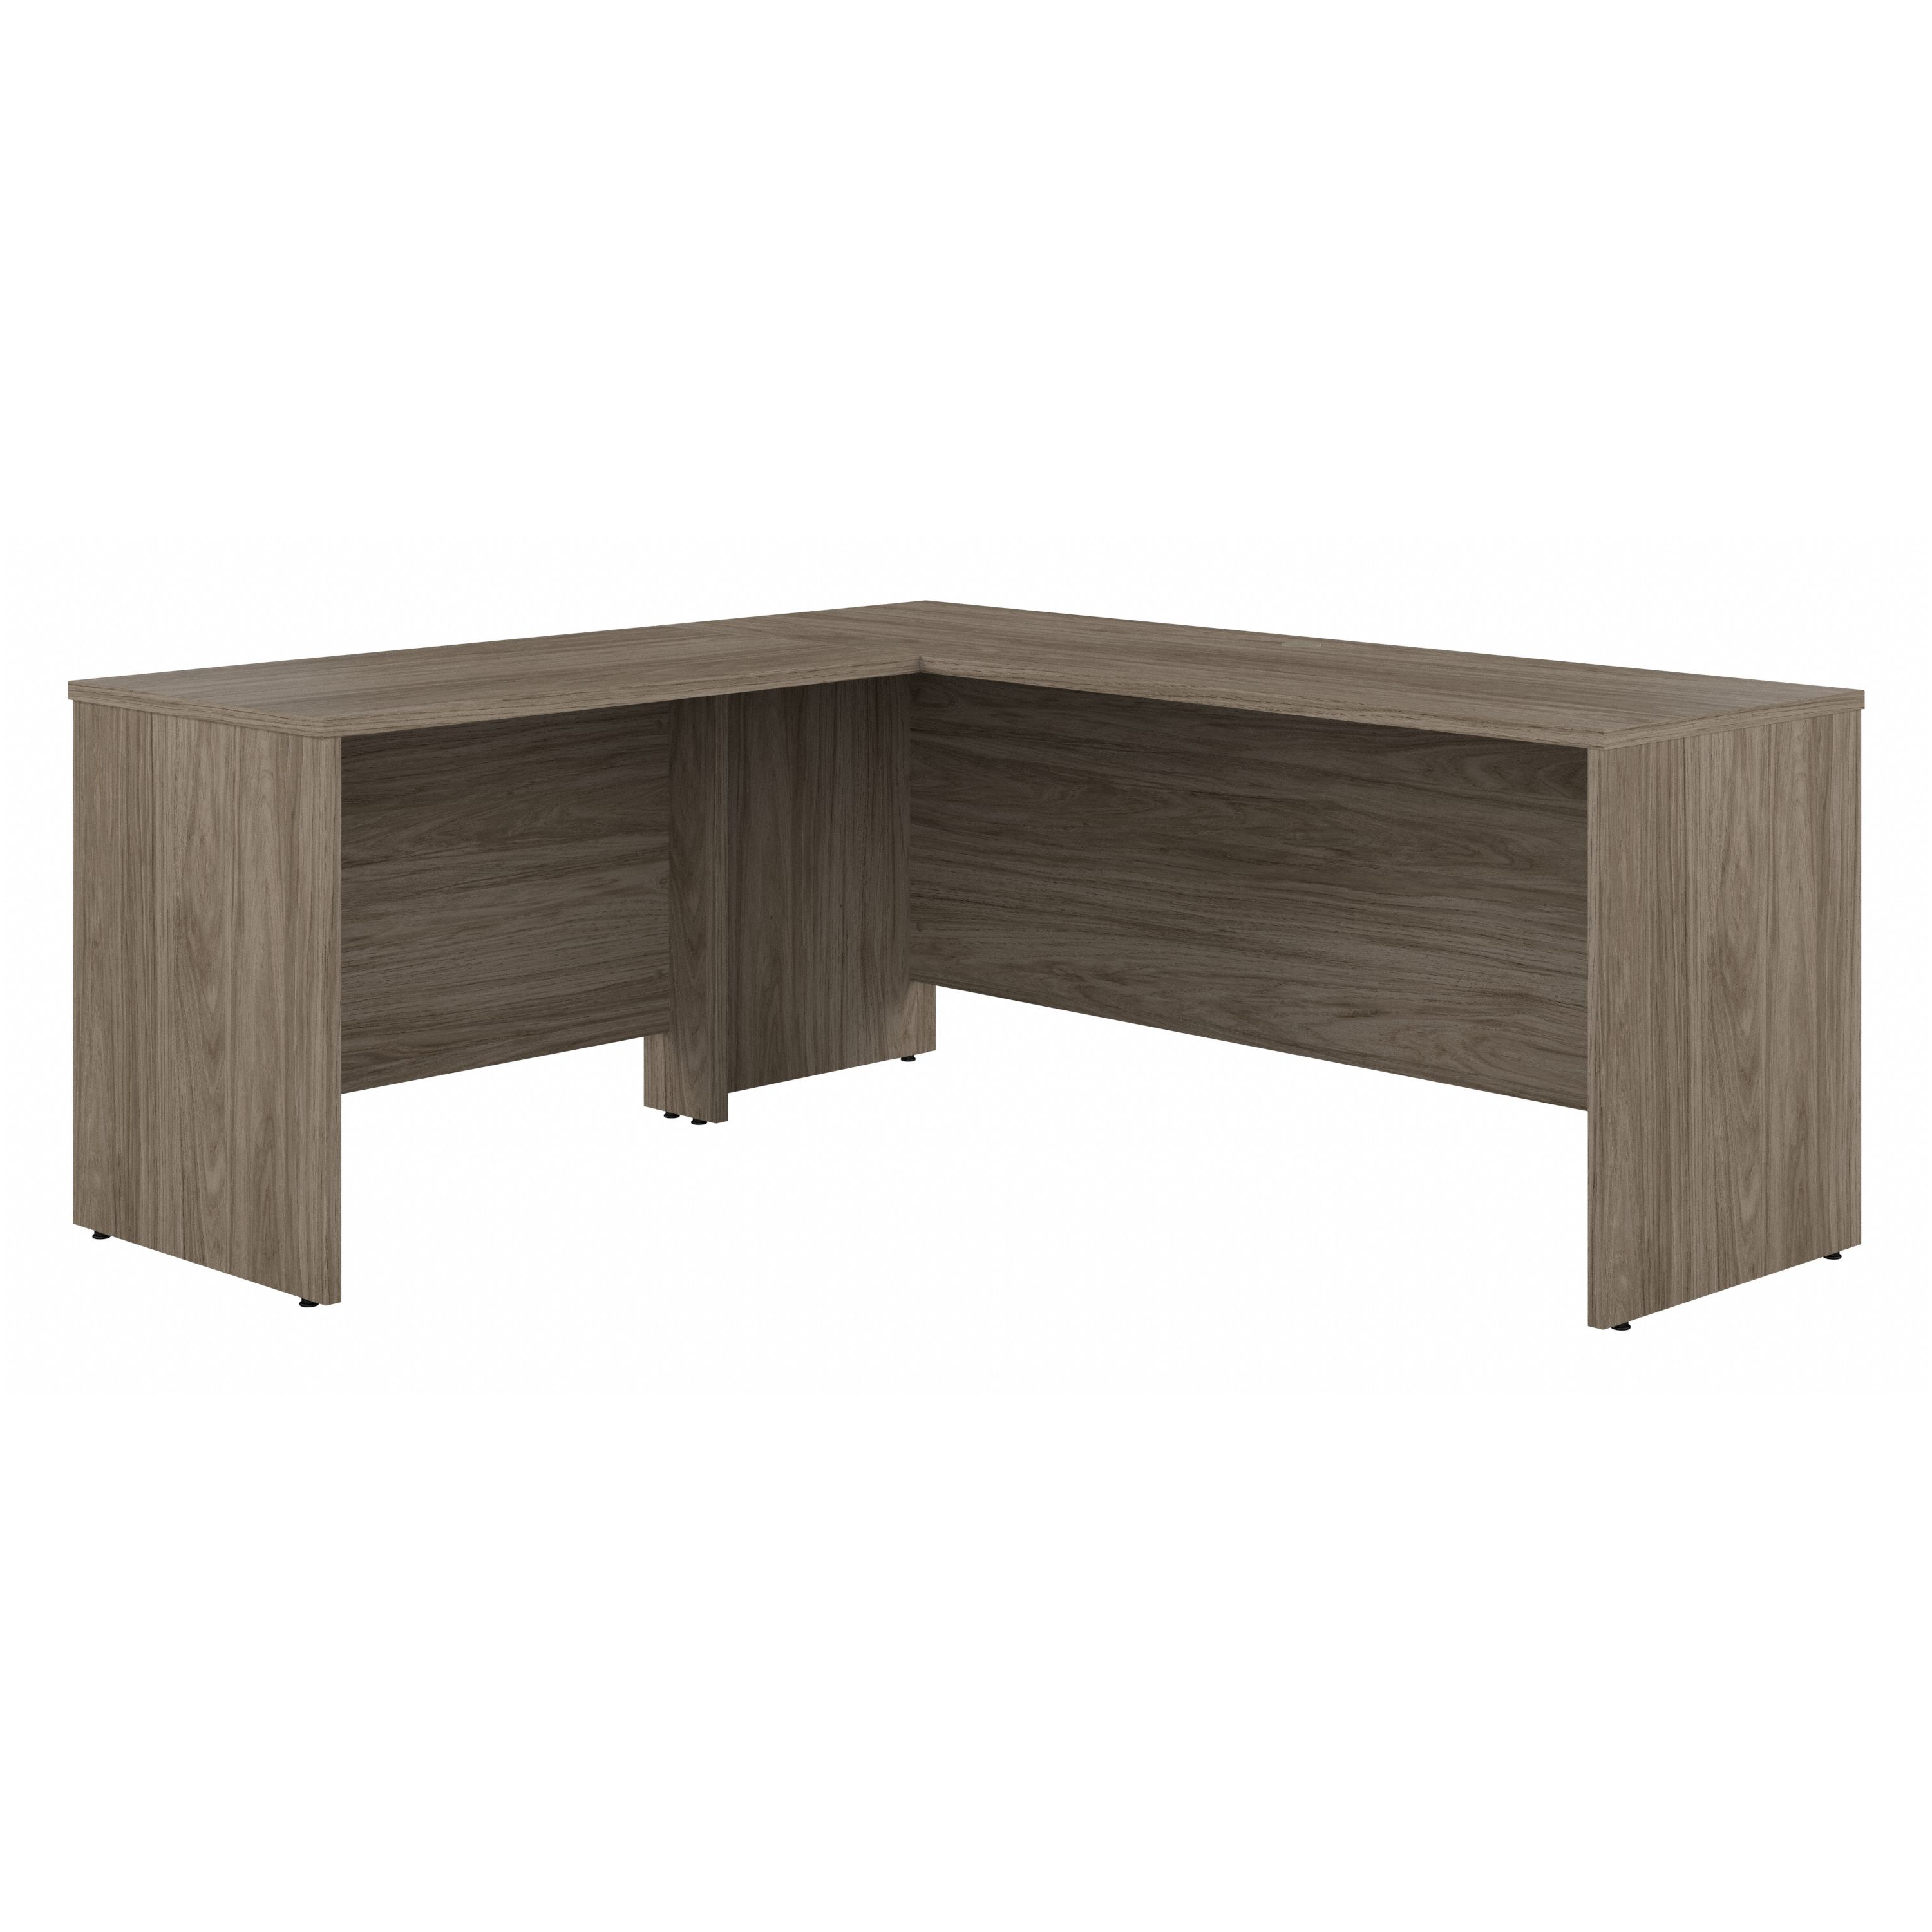 Shop Bush Business Furniture Studio C 72W x 24D L Shaped Desk with 42W Return 02 STC052MH #color_modern hickory